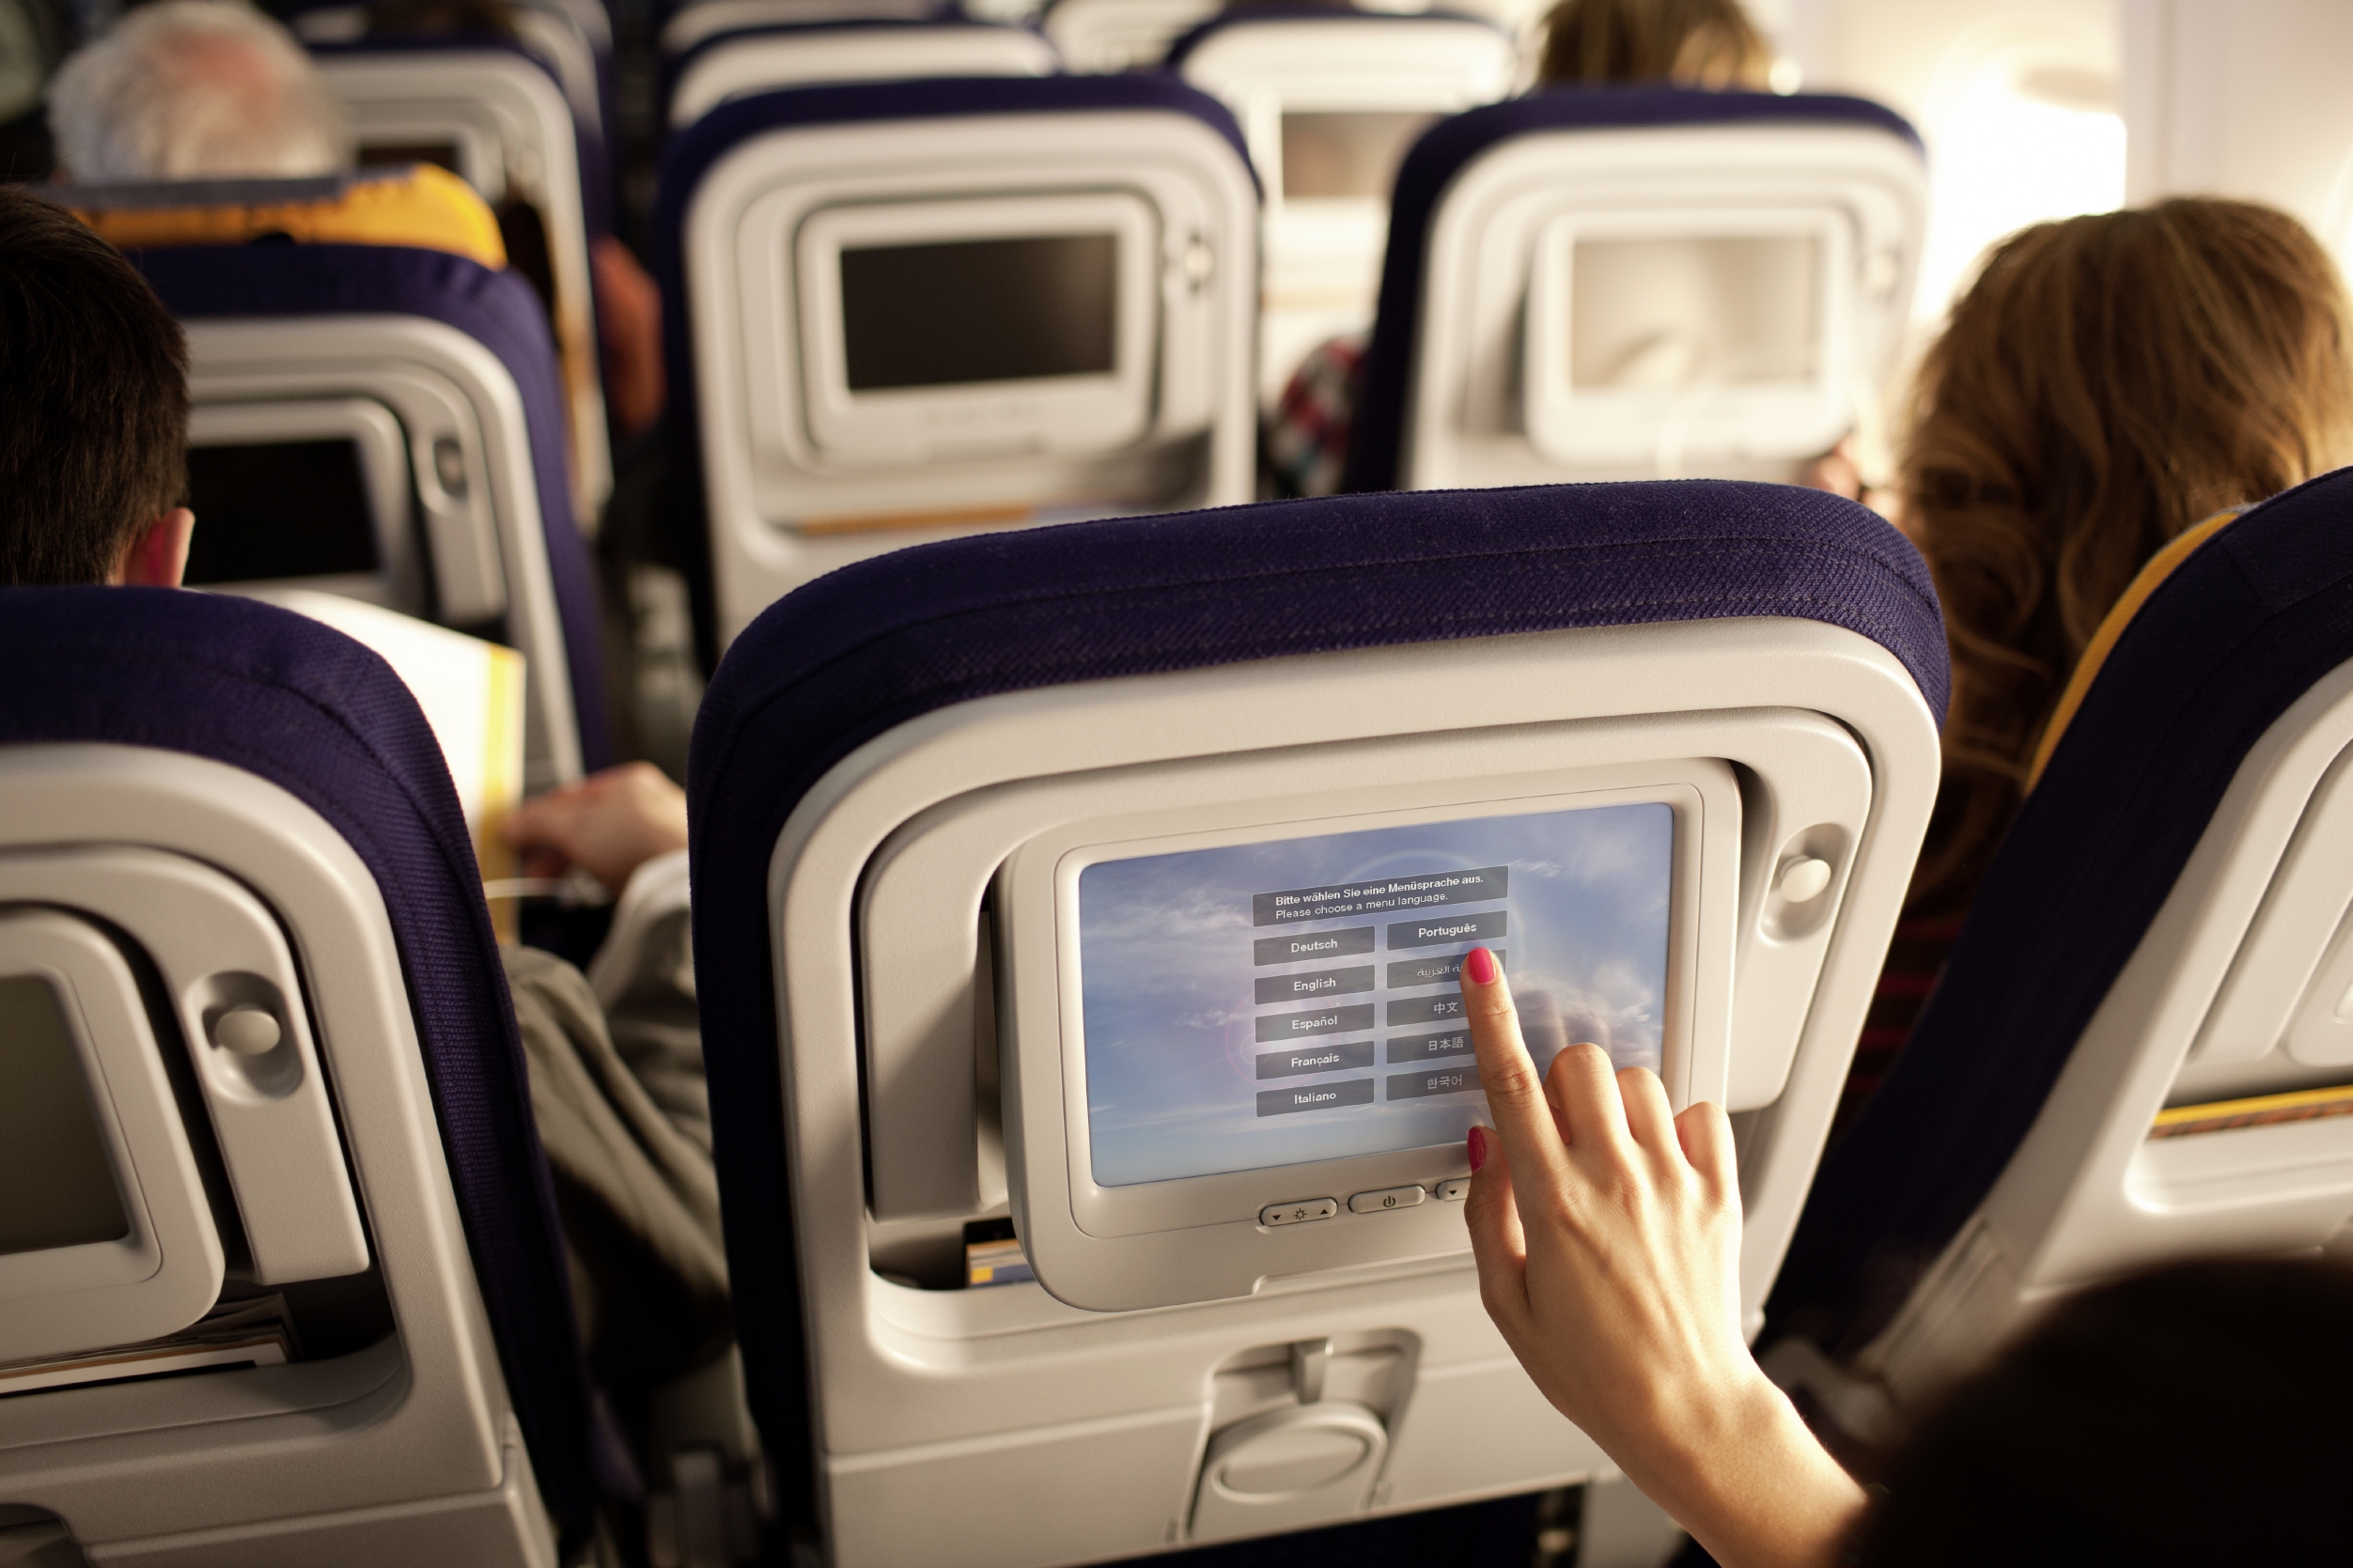 Lufthansa Economy Class Angebote Mit Spartrick Insideflyer De